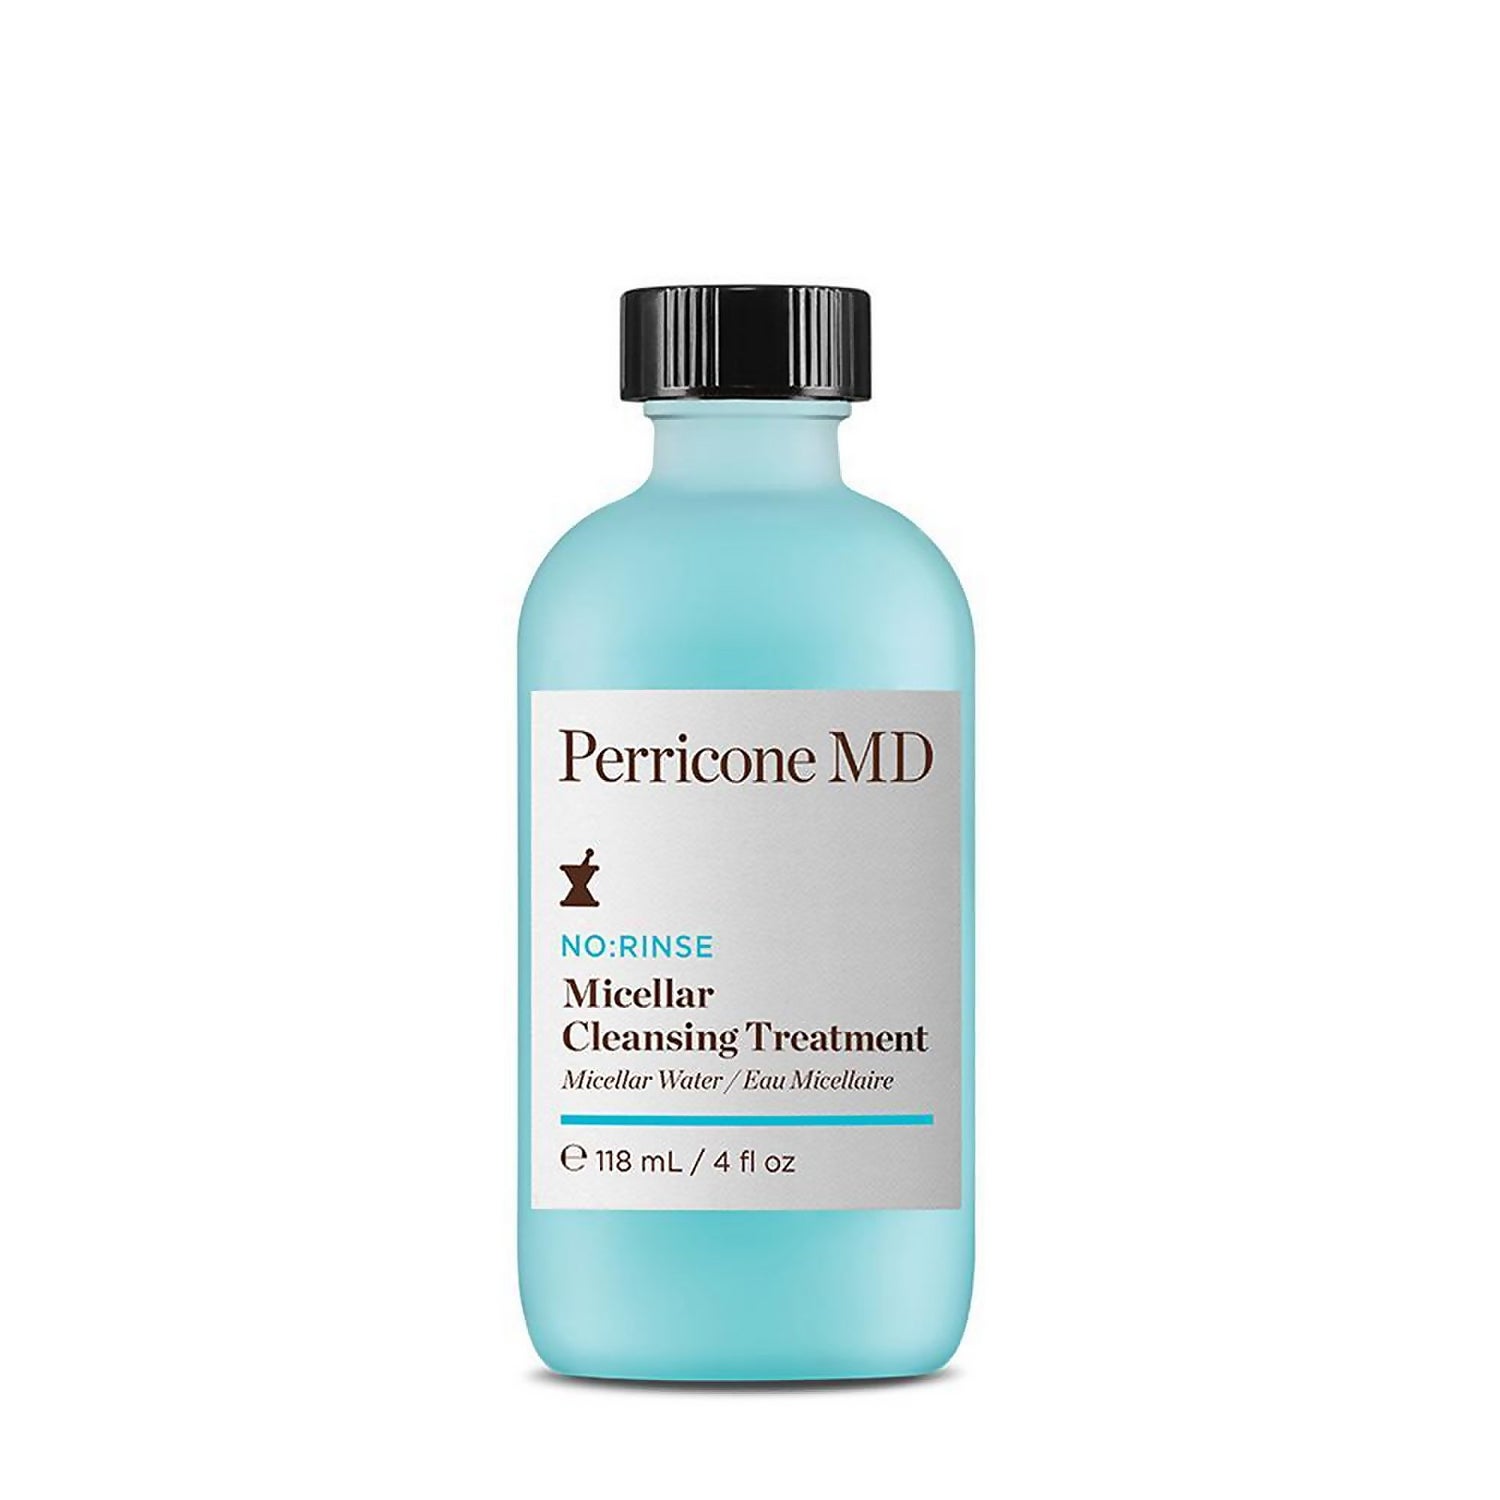 Perricone MD Micellar Cleansing Treatment (4 fl. oz.)